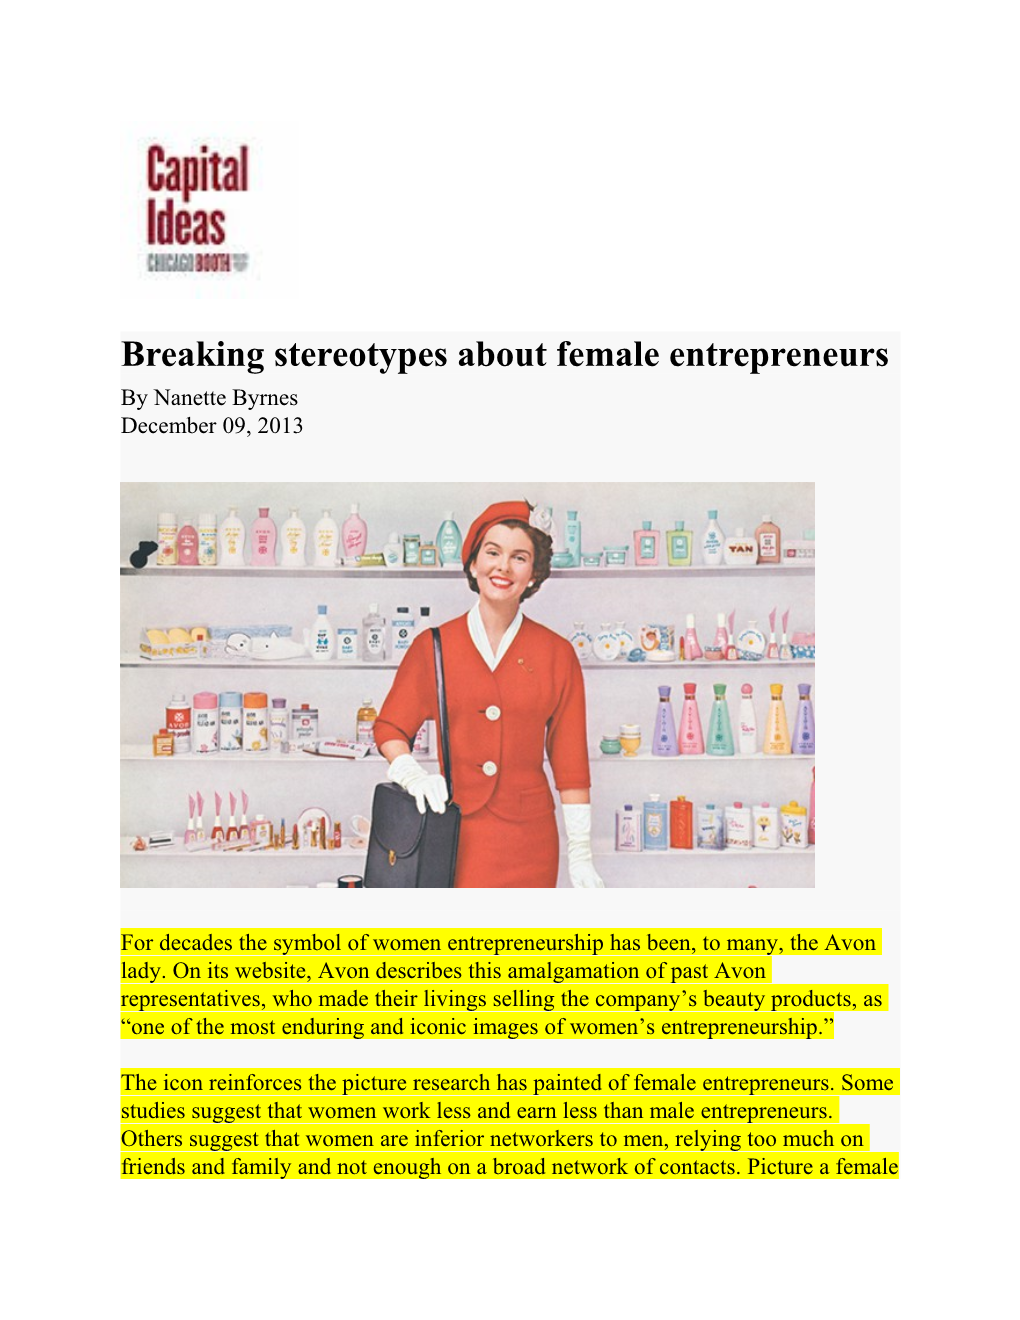 Breaking Stereotypes About Female Entrepreneurs